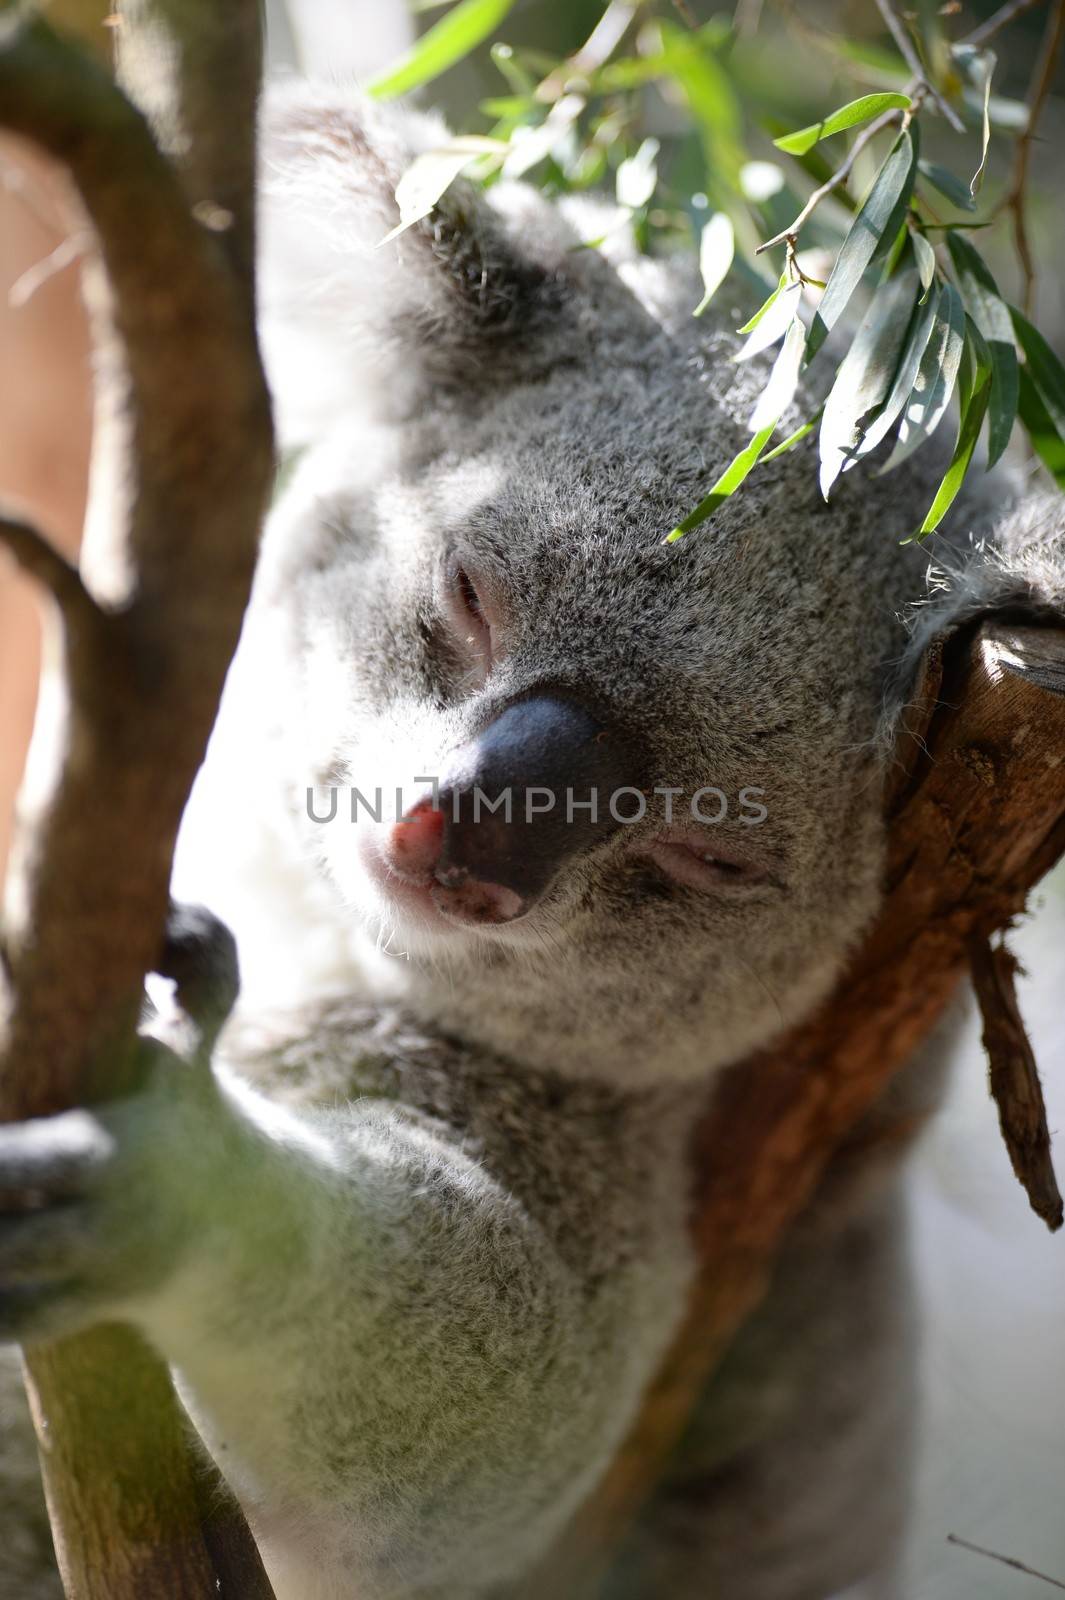 An Australian Koala in its natural habitat